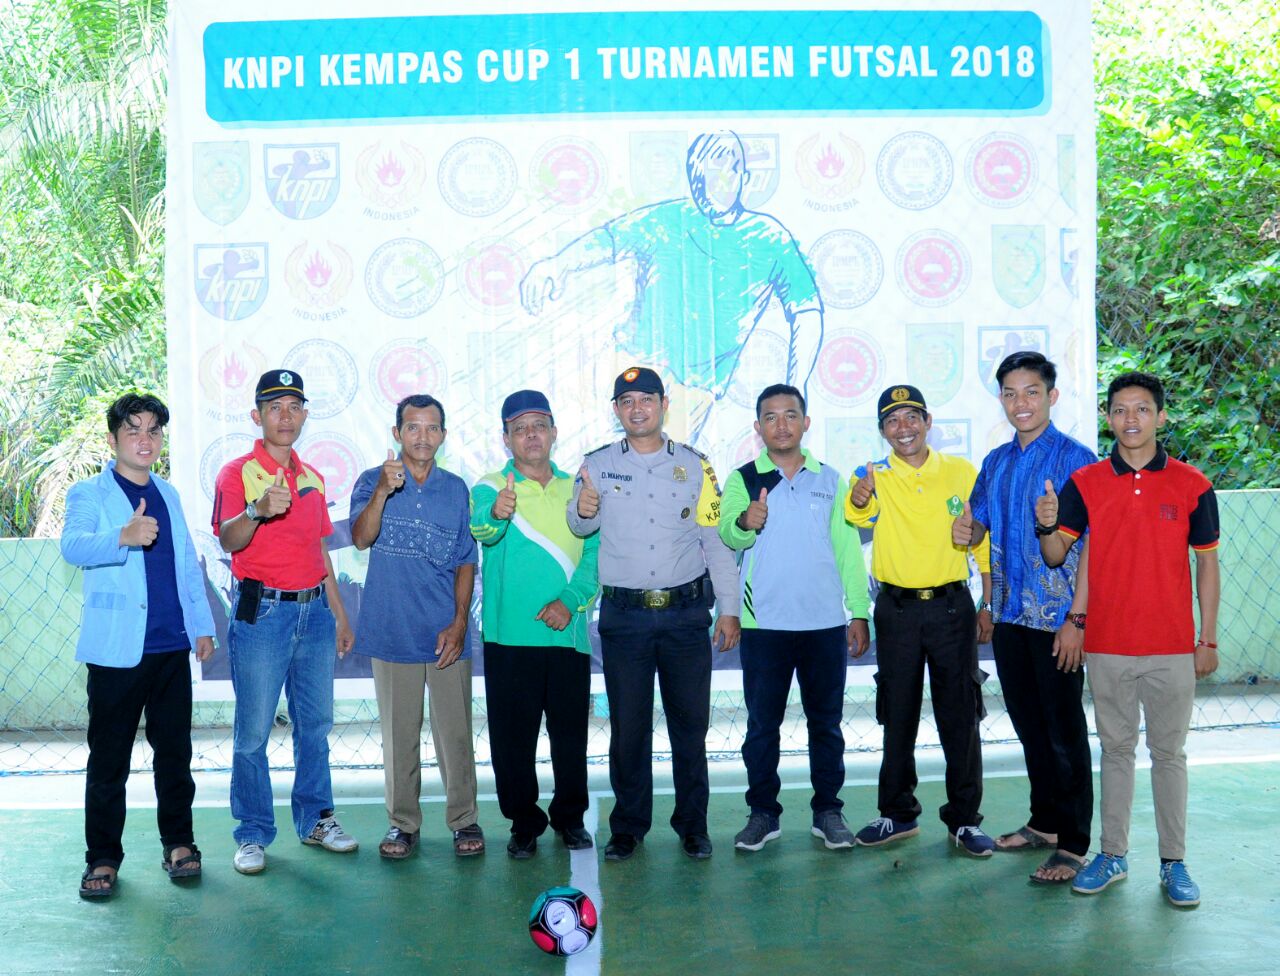 Open Turnamen Futsal CUP 1 KNPI Kempas Resmi dibuka